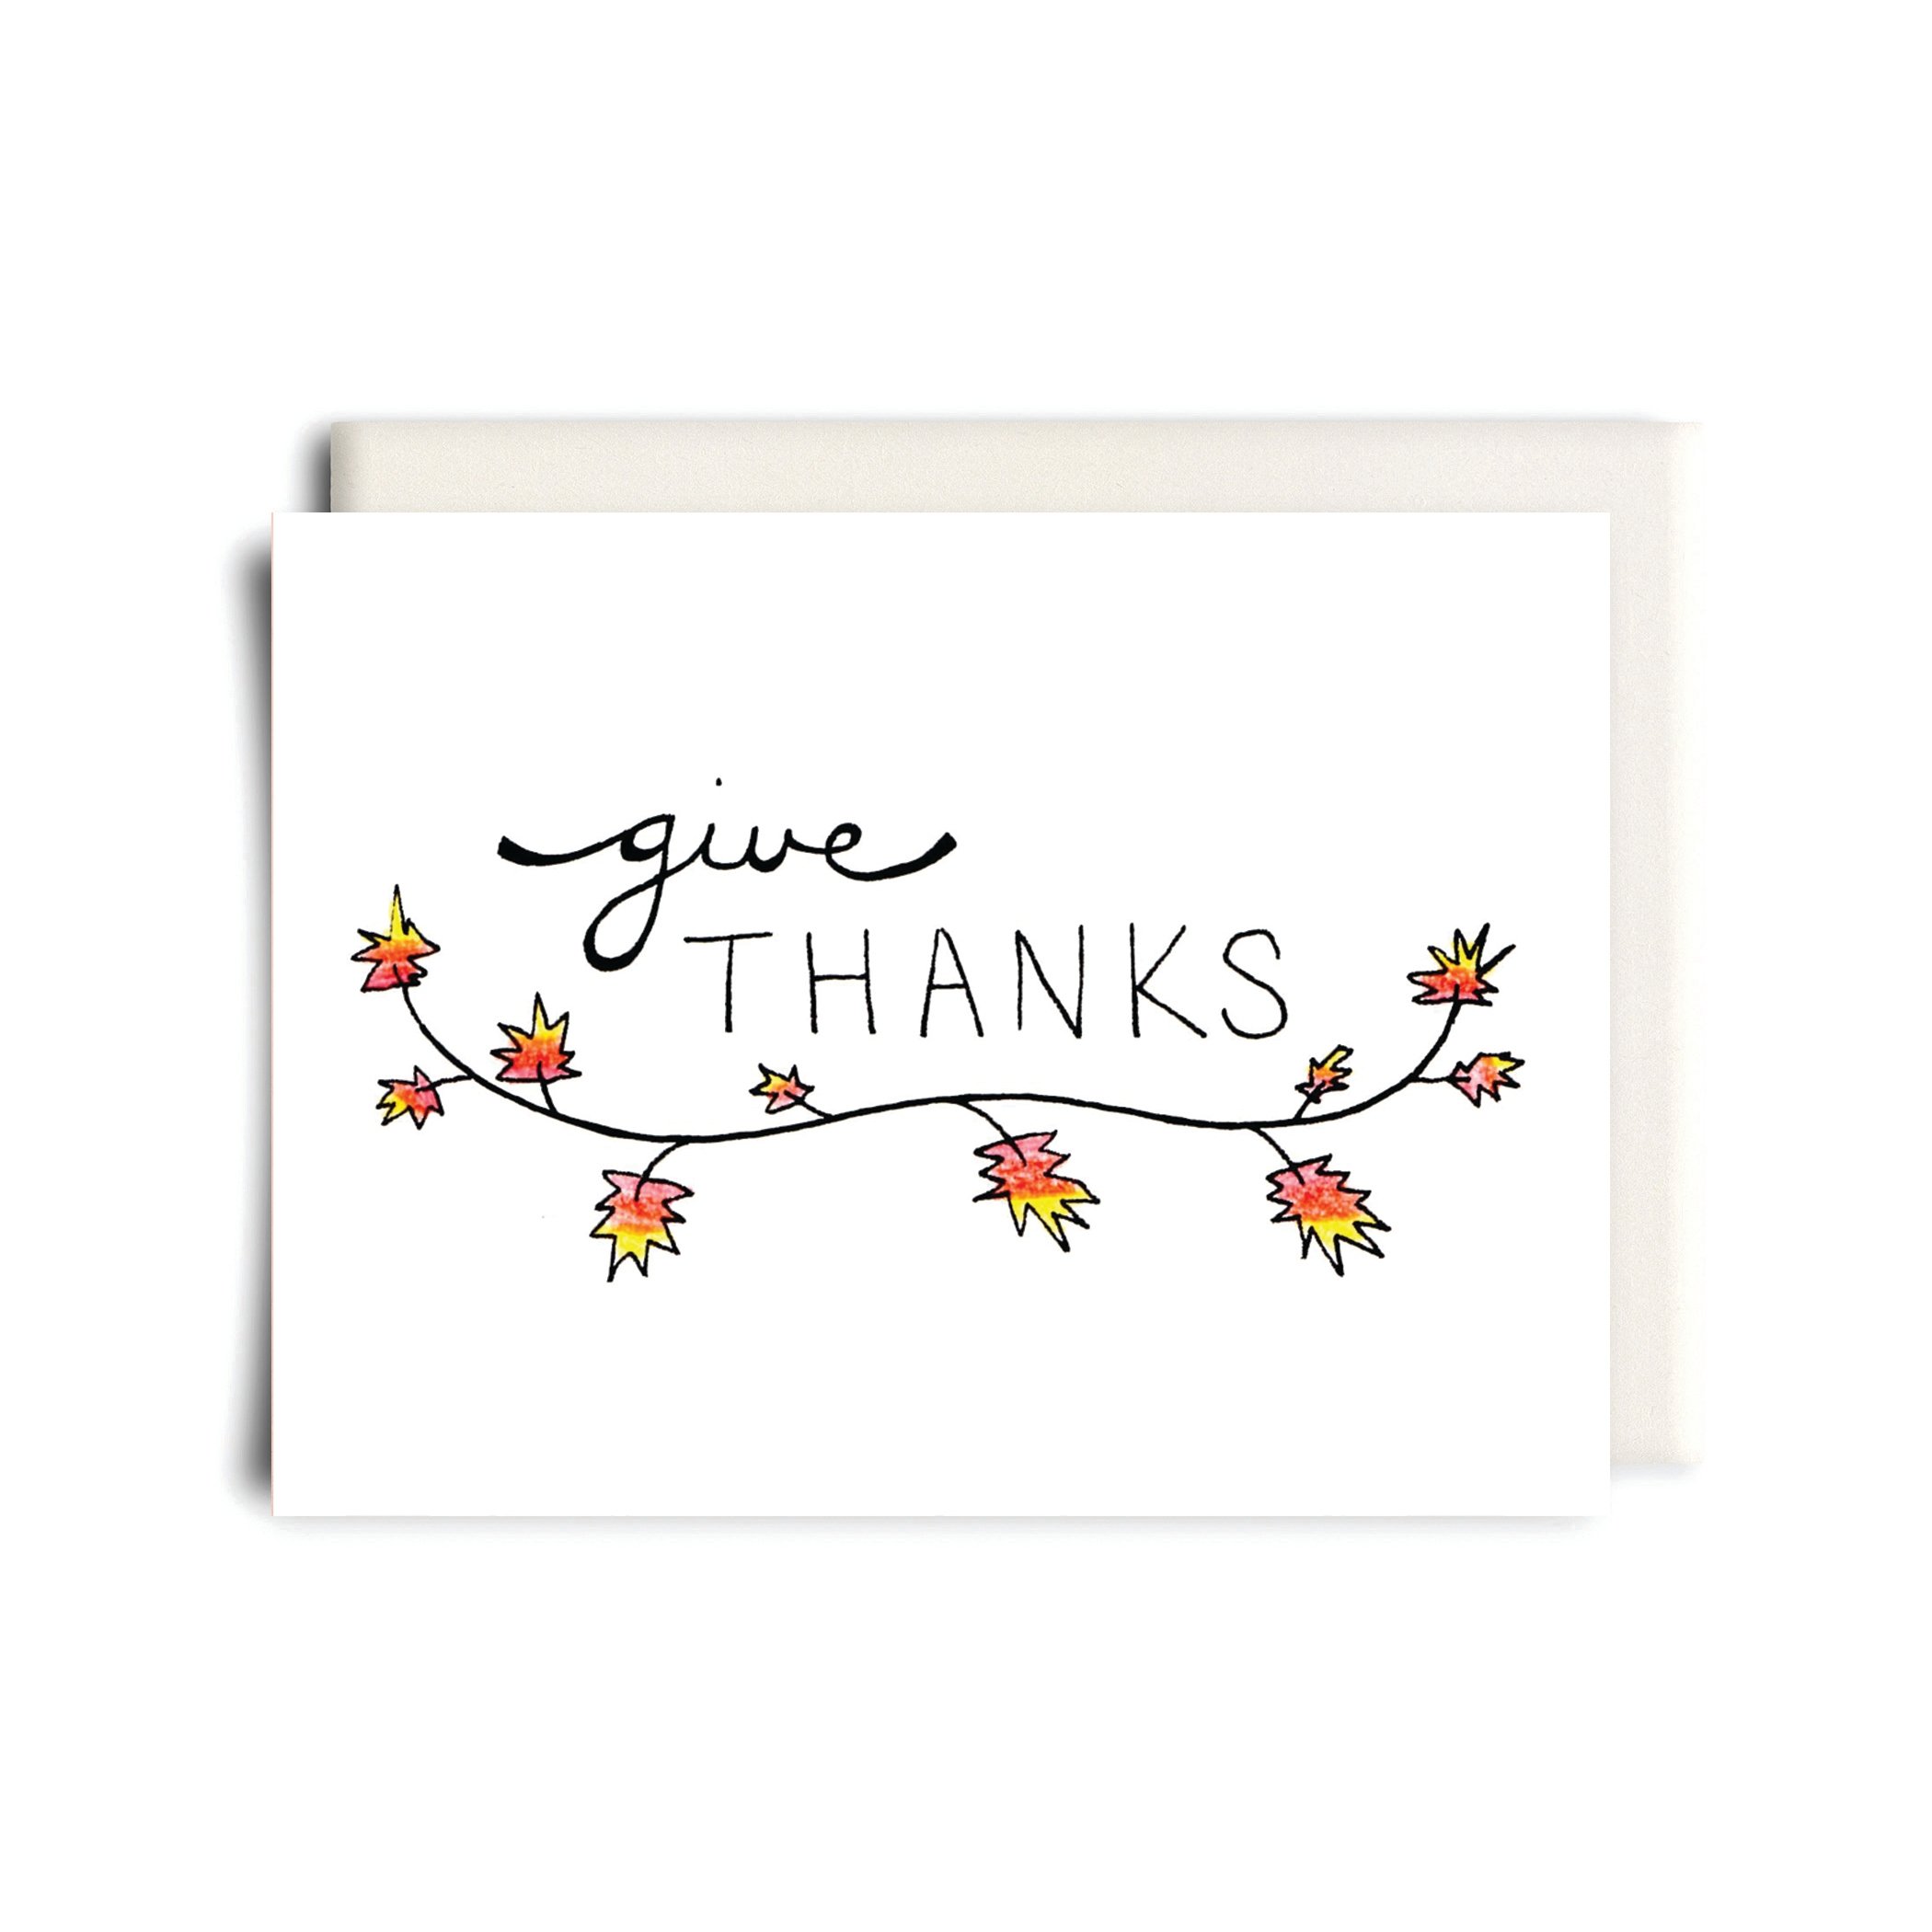 Give Thanks Thanksgiving Greeting Card.jpeg